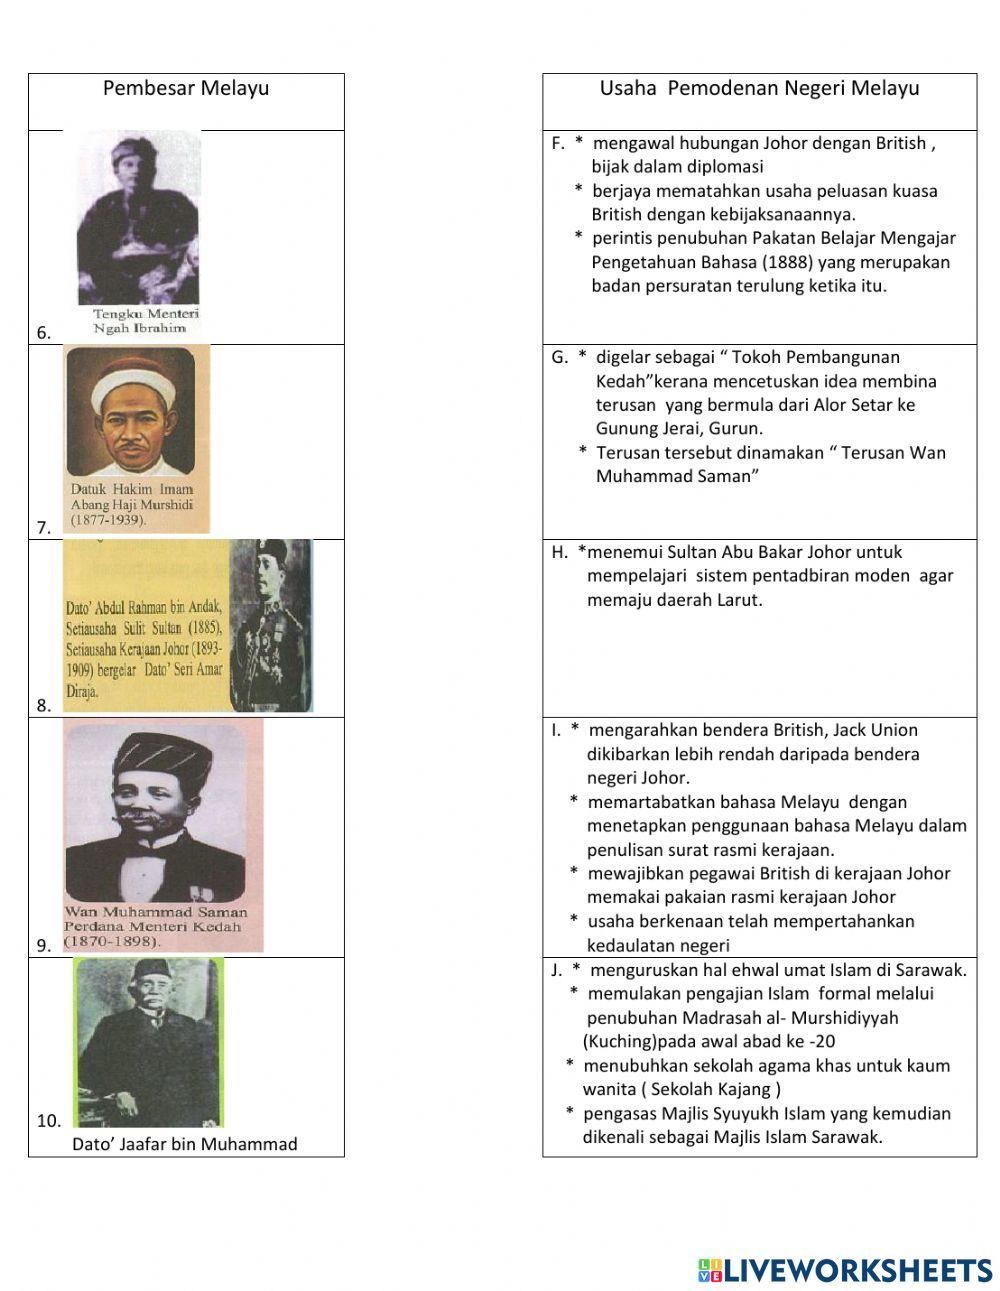 Sejarah T.3  Bab  8.3 Usaha Pembesar Melayu Dalam Pemodenan Negeri